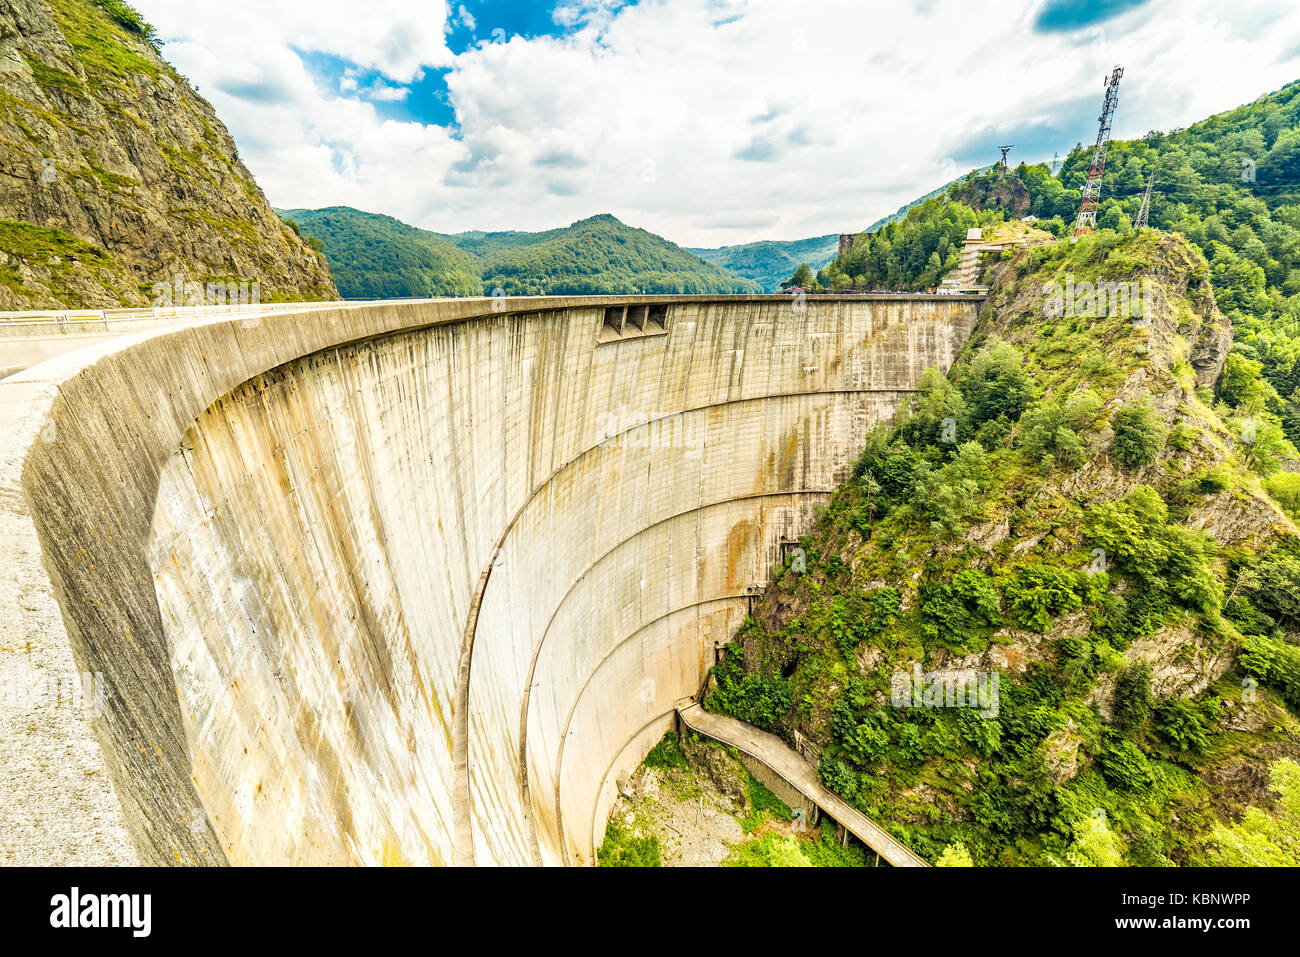 Vidraru dam located in Fagaras mountains, Romania Stock Photo